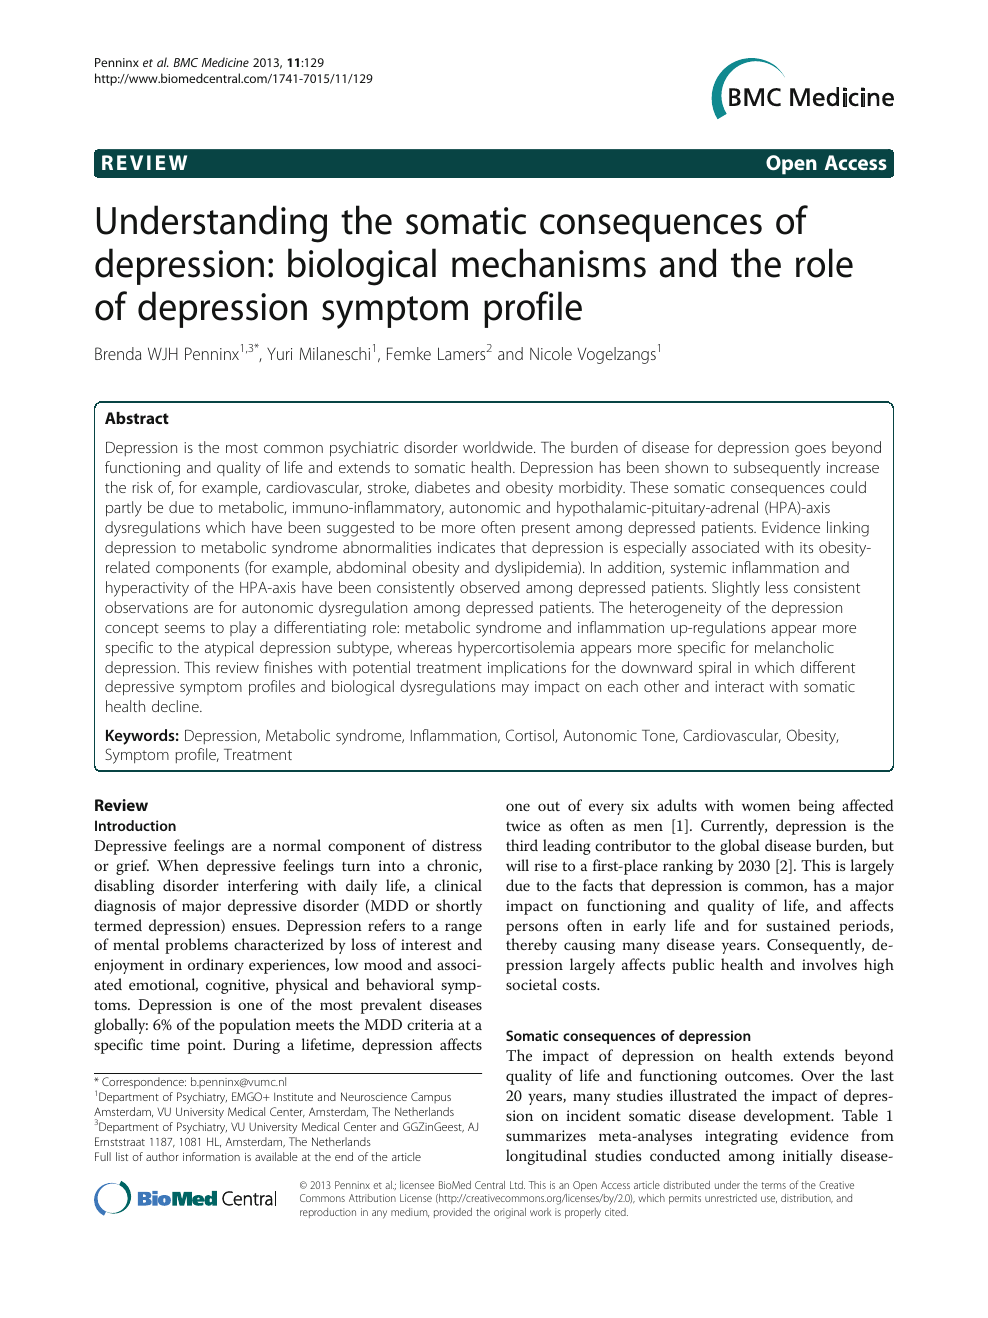 A somatization comorbidity phenotype impacts response to therapy